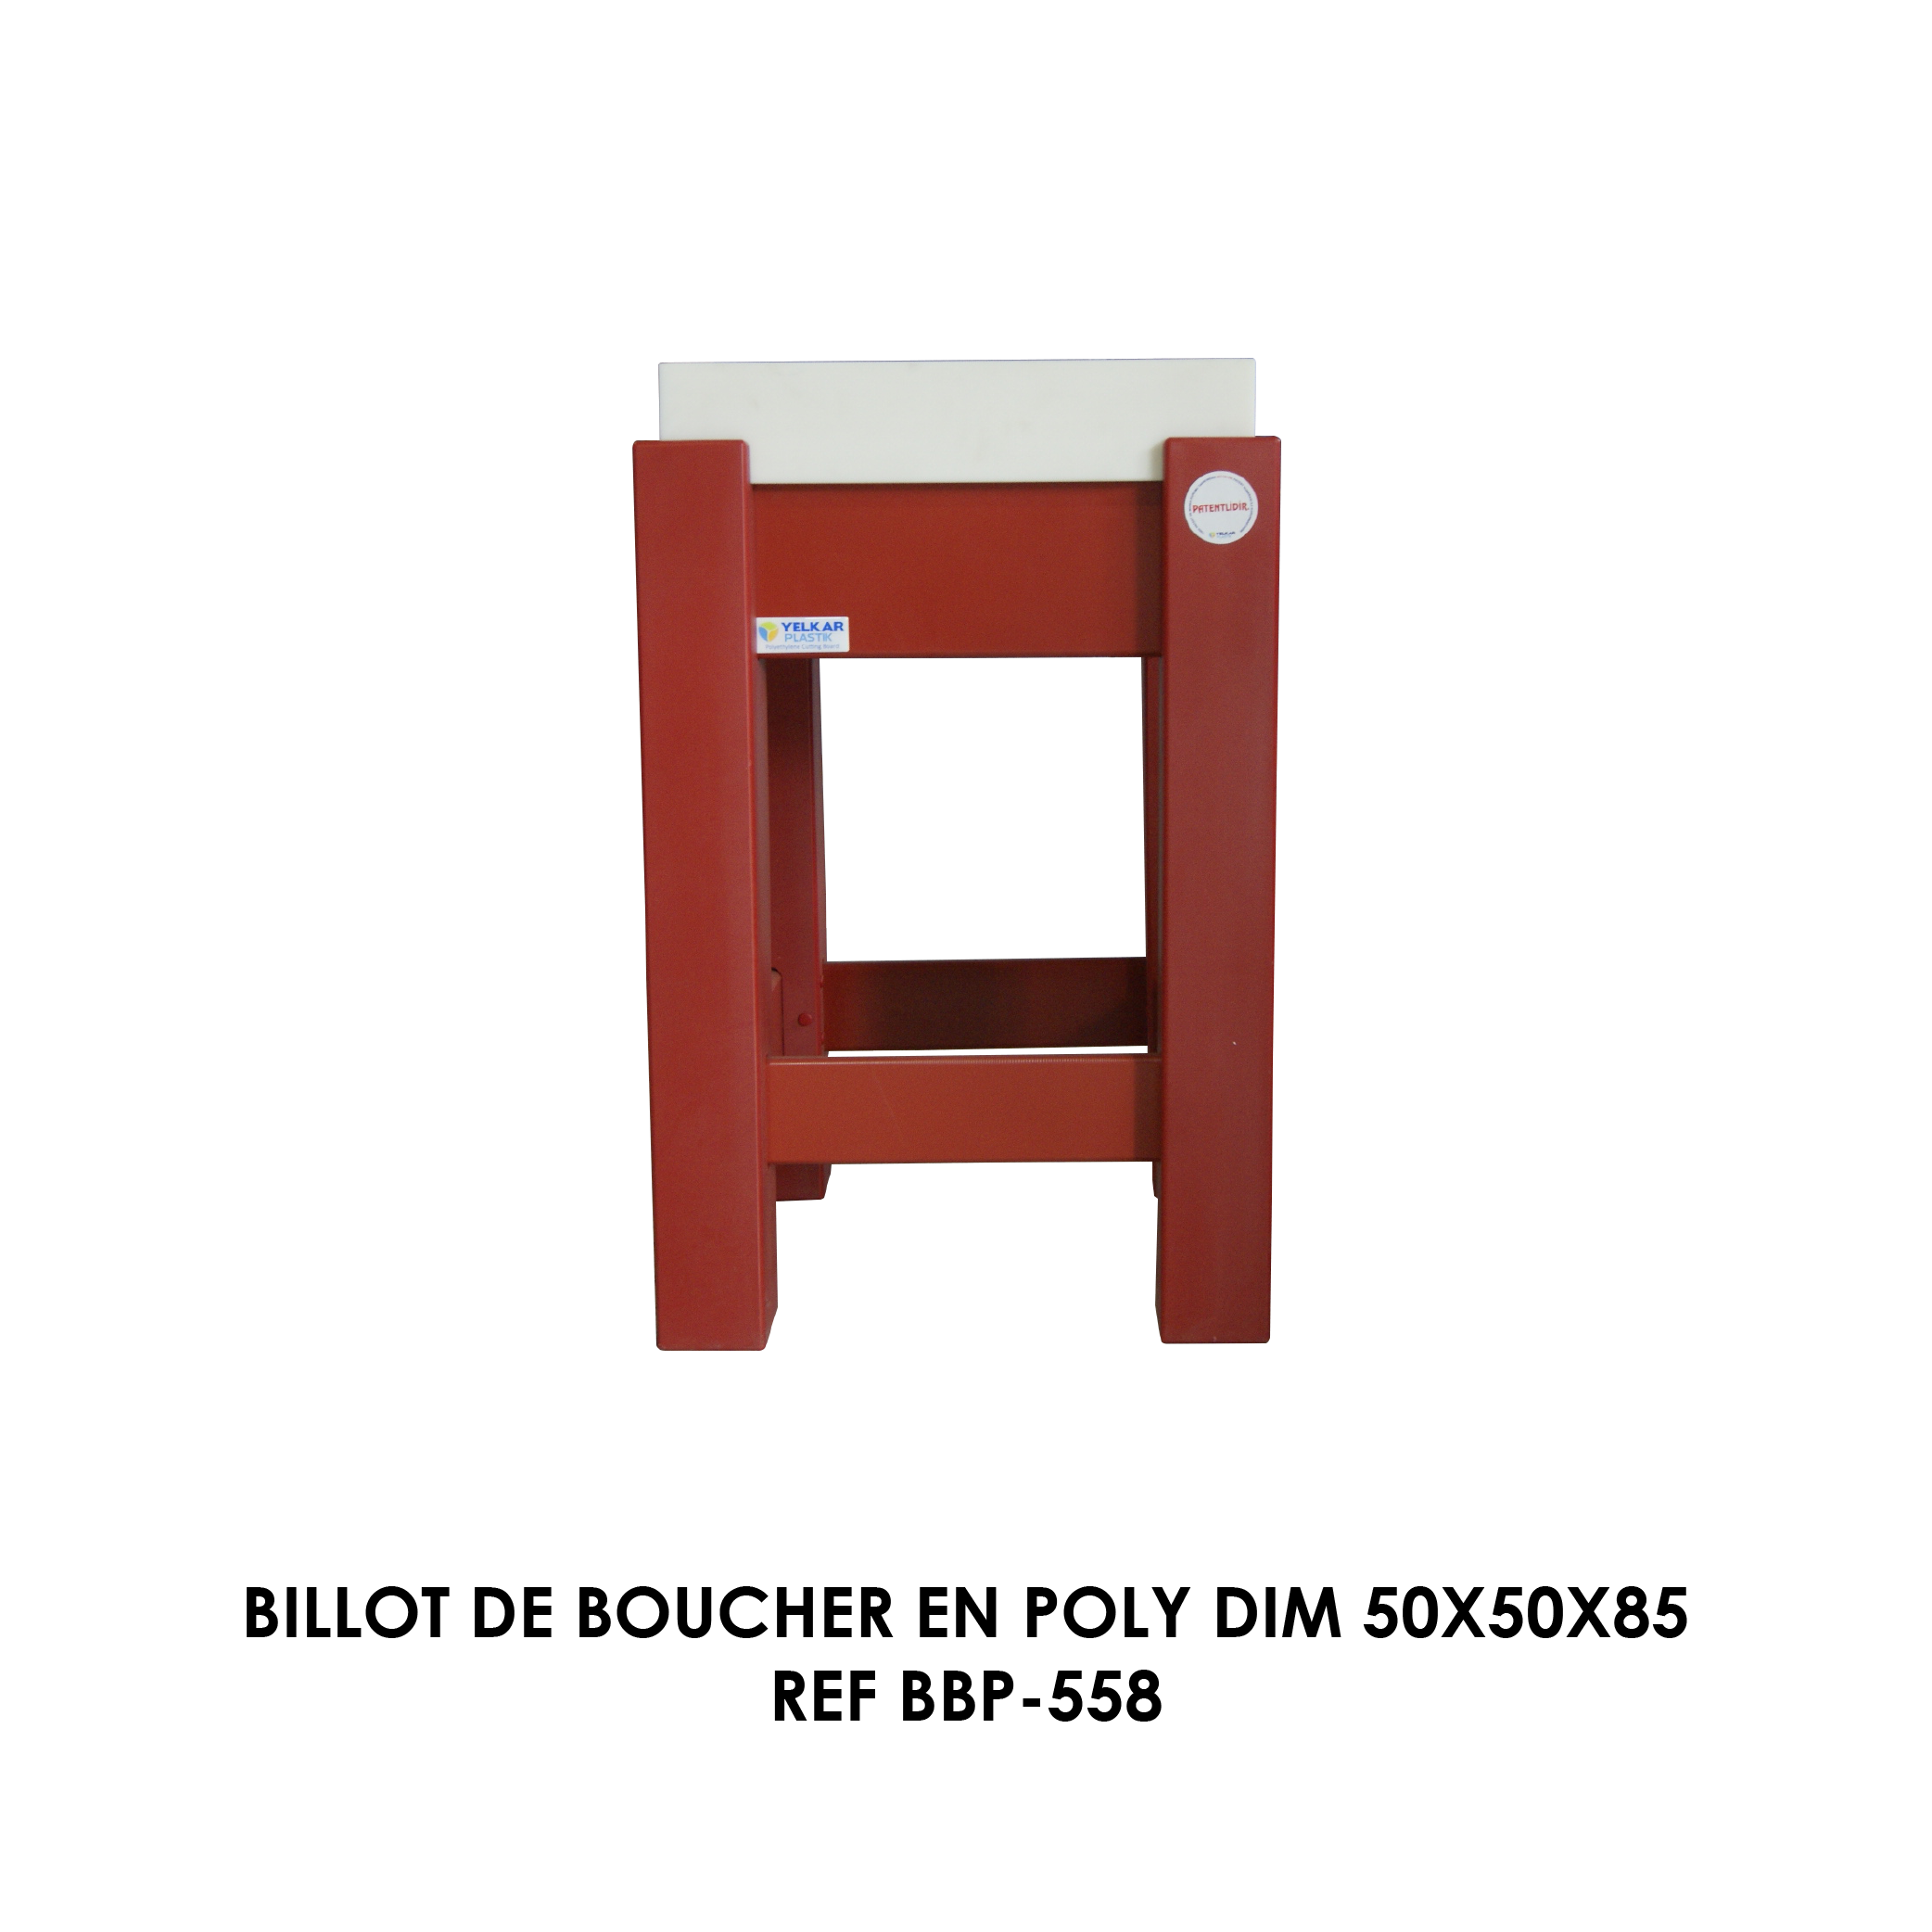 BILLOT DE BOUCHER EN POLY DIM 50X50X85 REF BBP-558